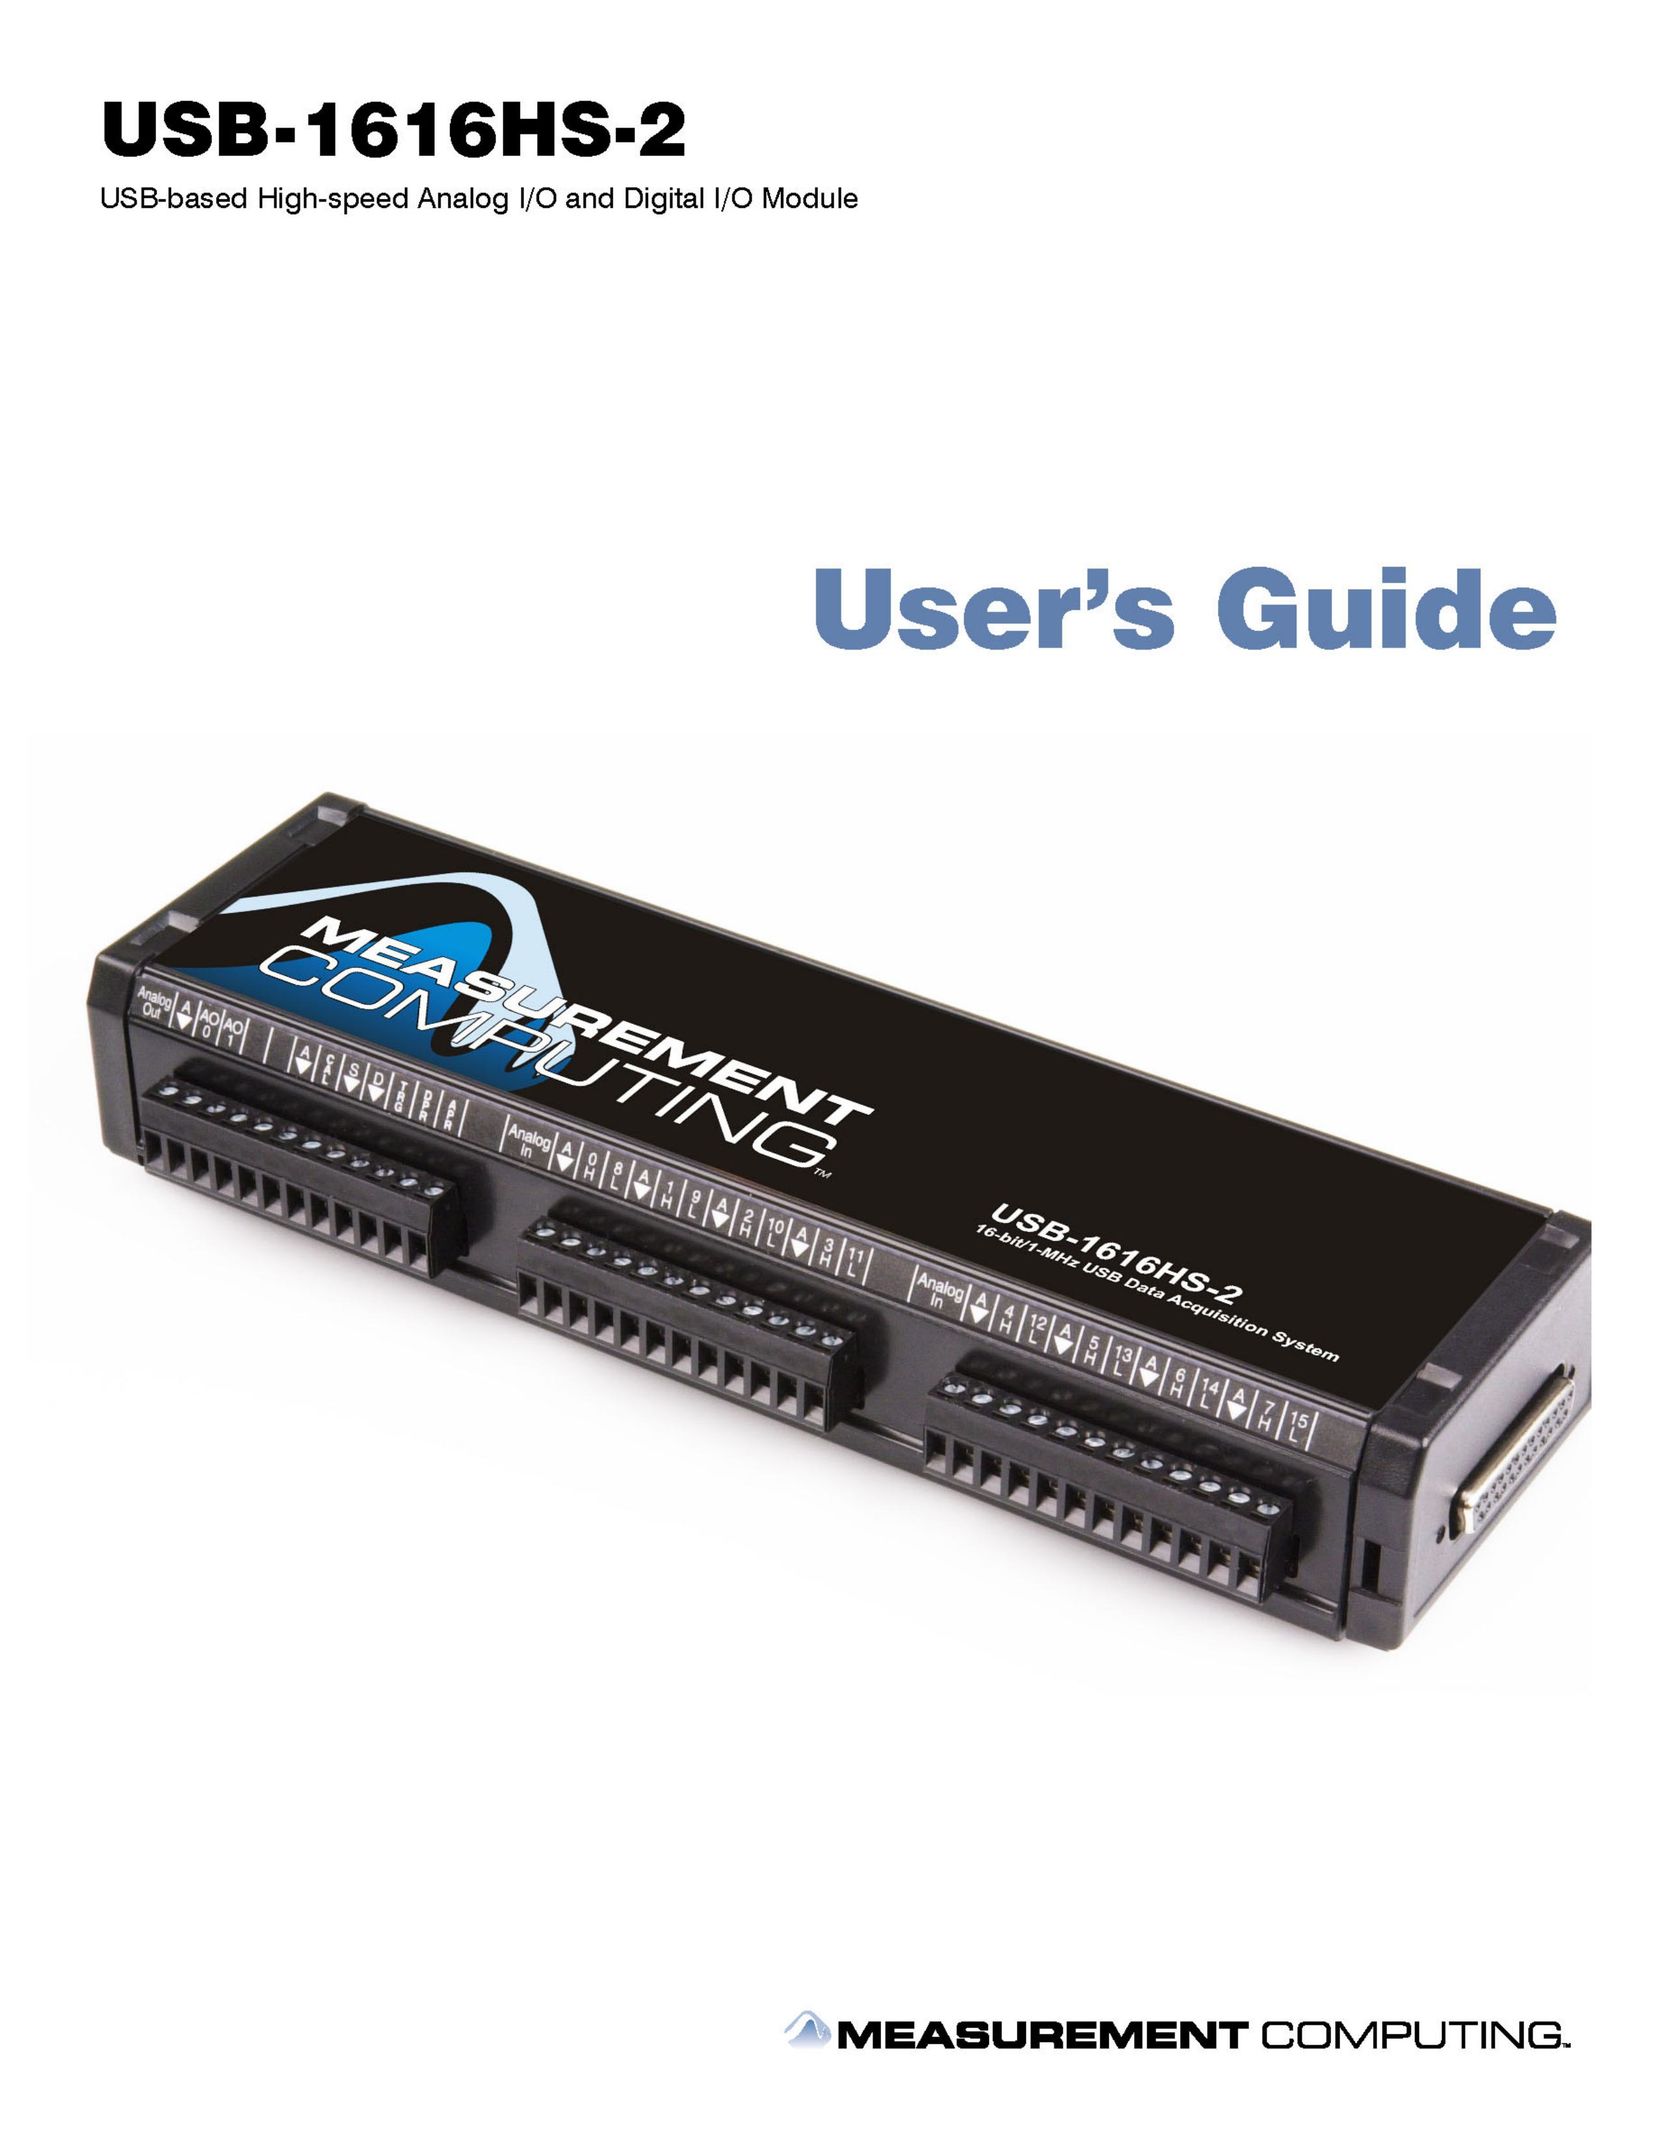 Measurement Specialties USB-1616HS-2 Computer Hardware User Manual